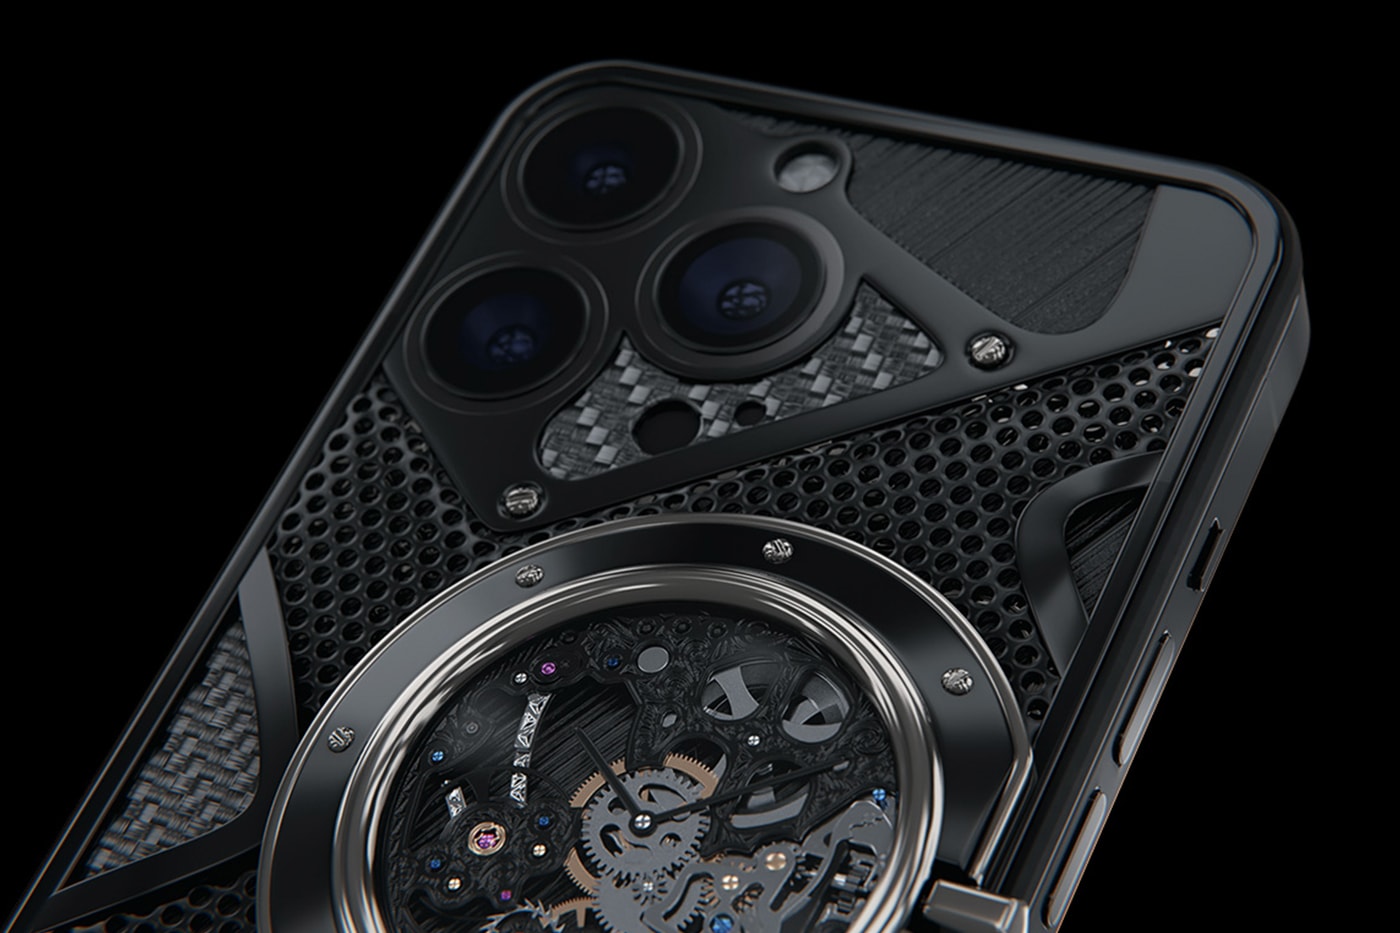 Caviar Grand Complications Rolex Daytona Built-In iPhone 14 Release Info Buy Price